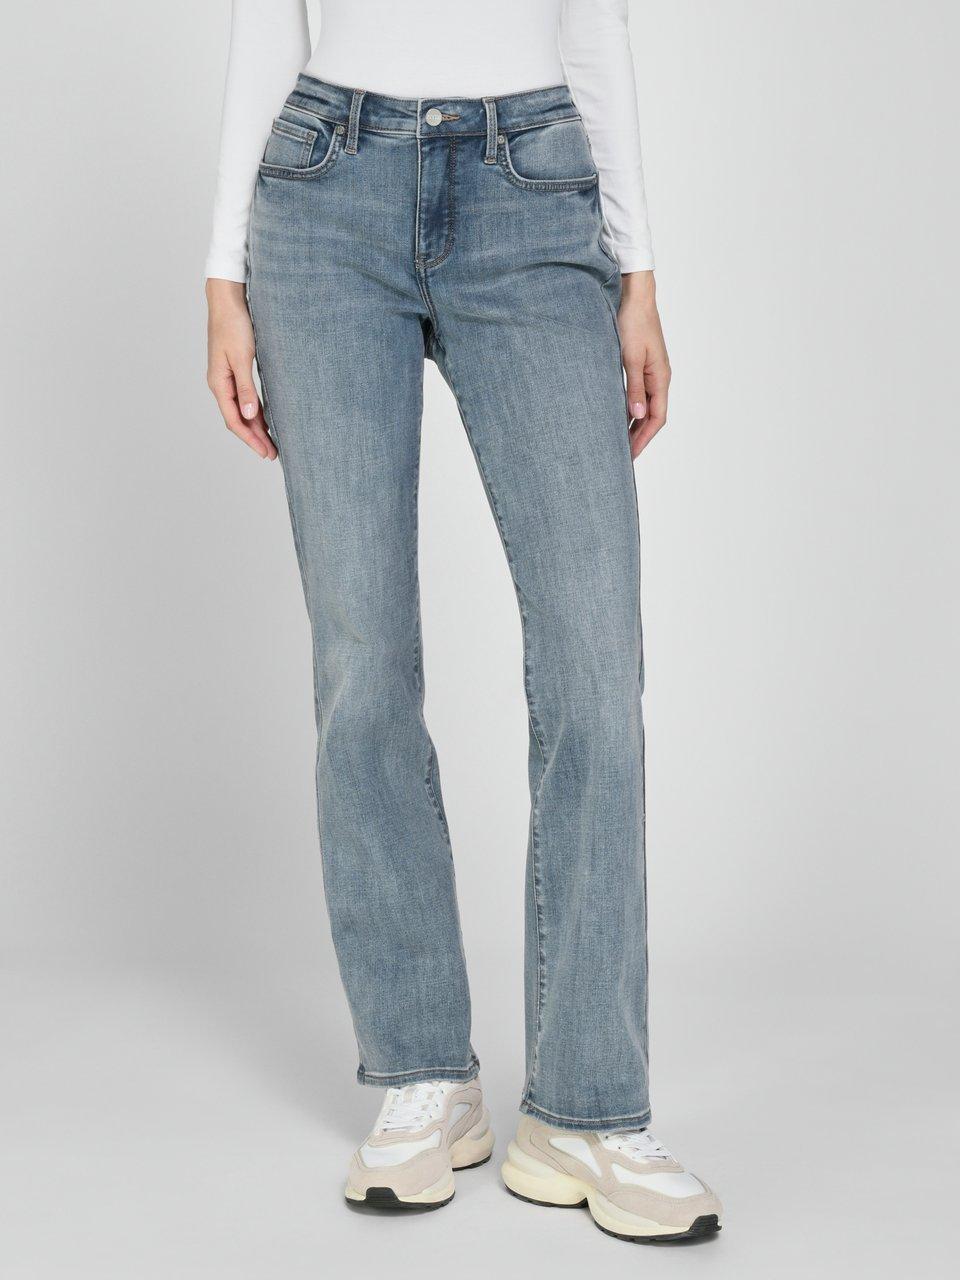 NYDJ - Jeans model Barbara Bootcut